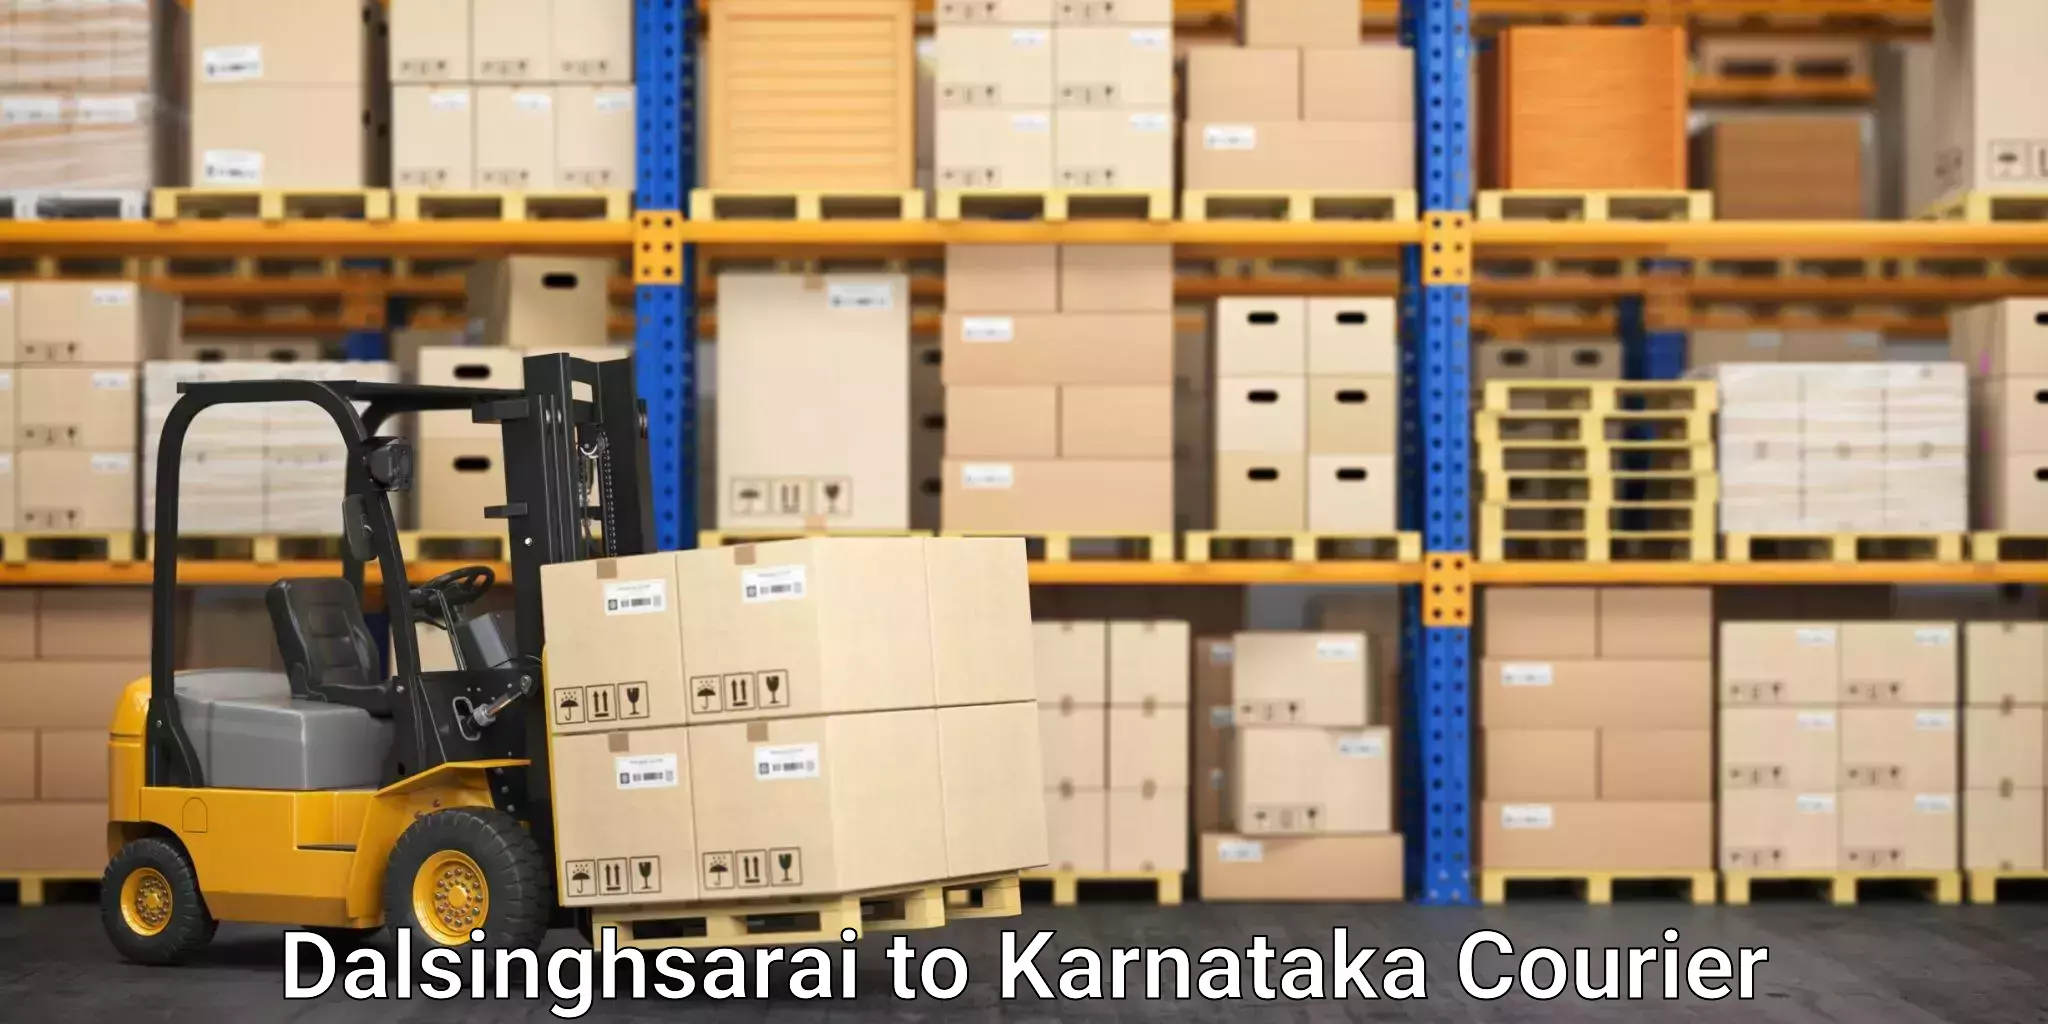 Efficient household movers Dalsinghsarai to Kanjarakatte